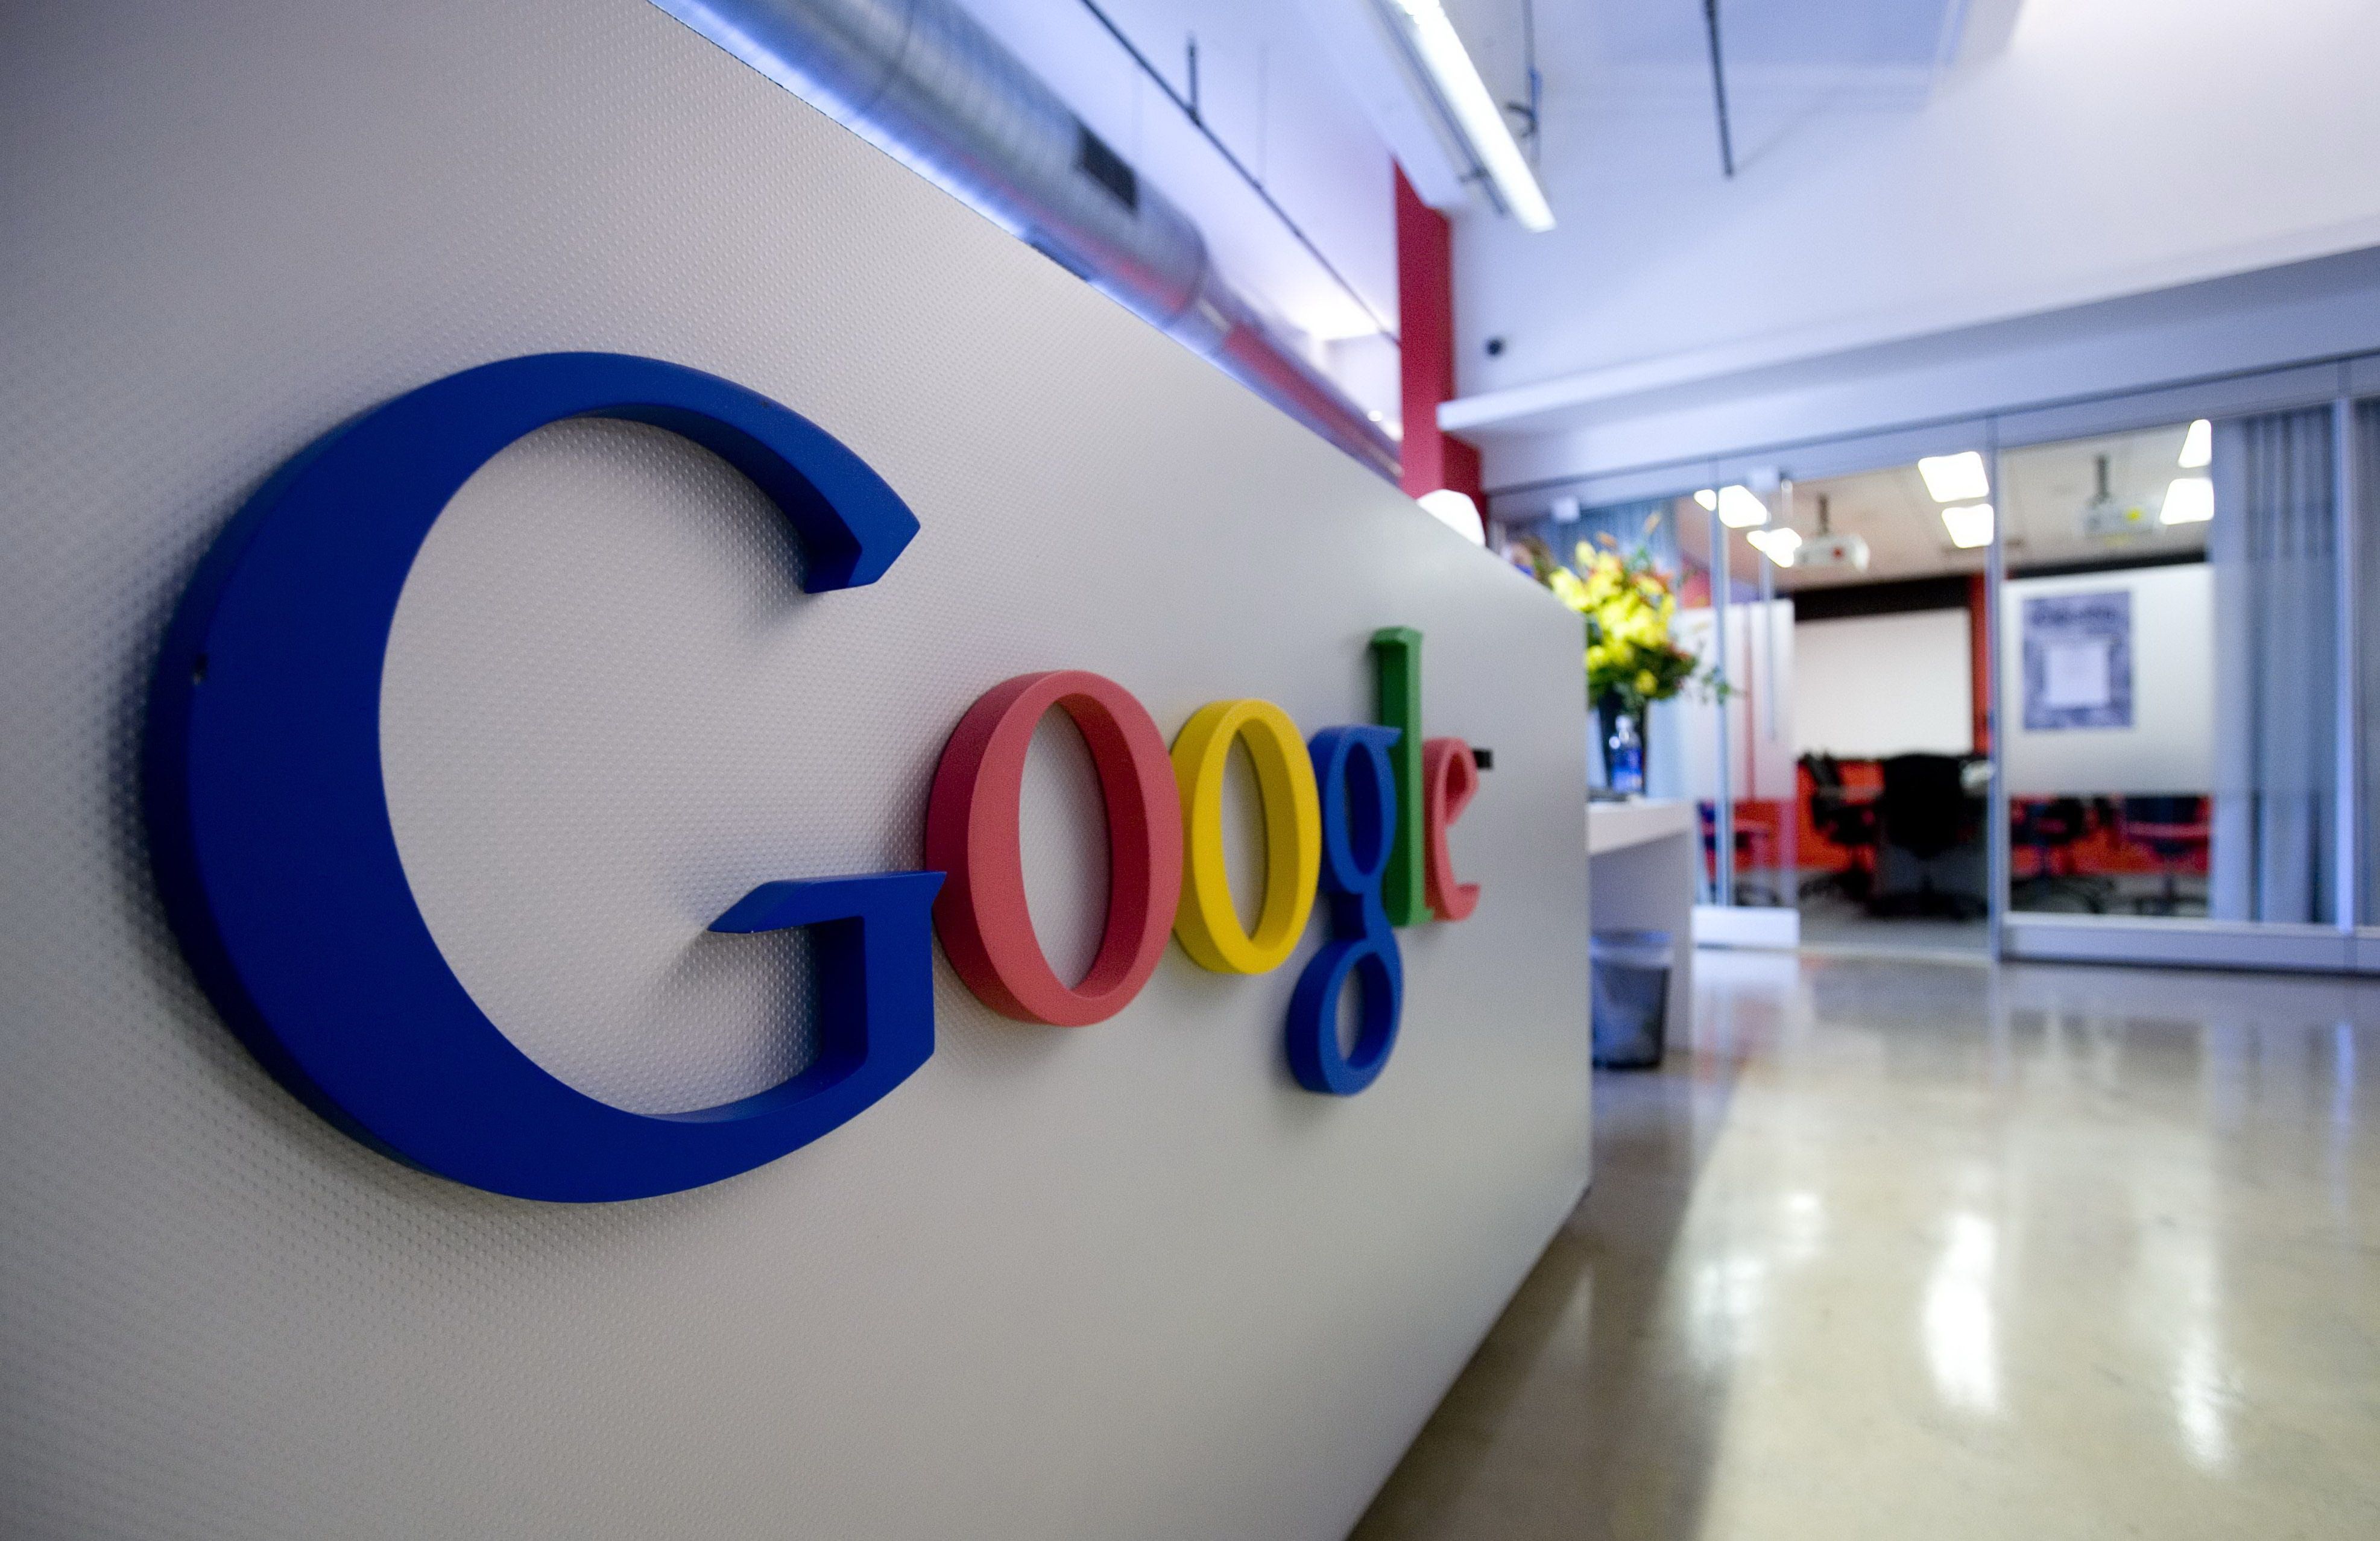 Mobilegeddon: Google's new movement